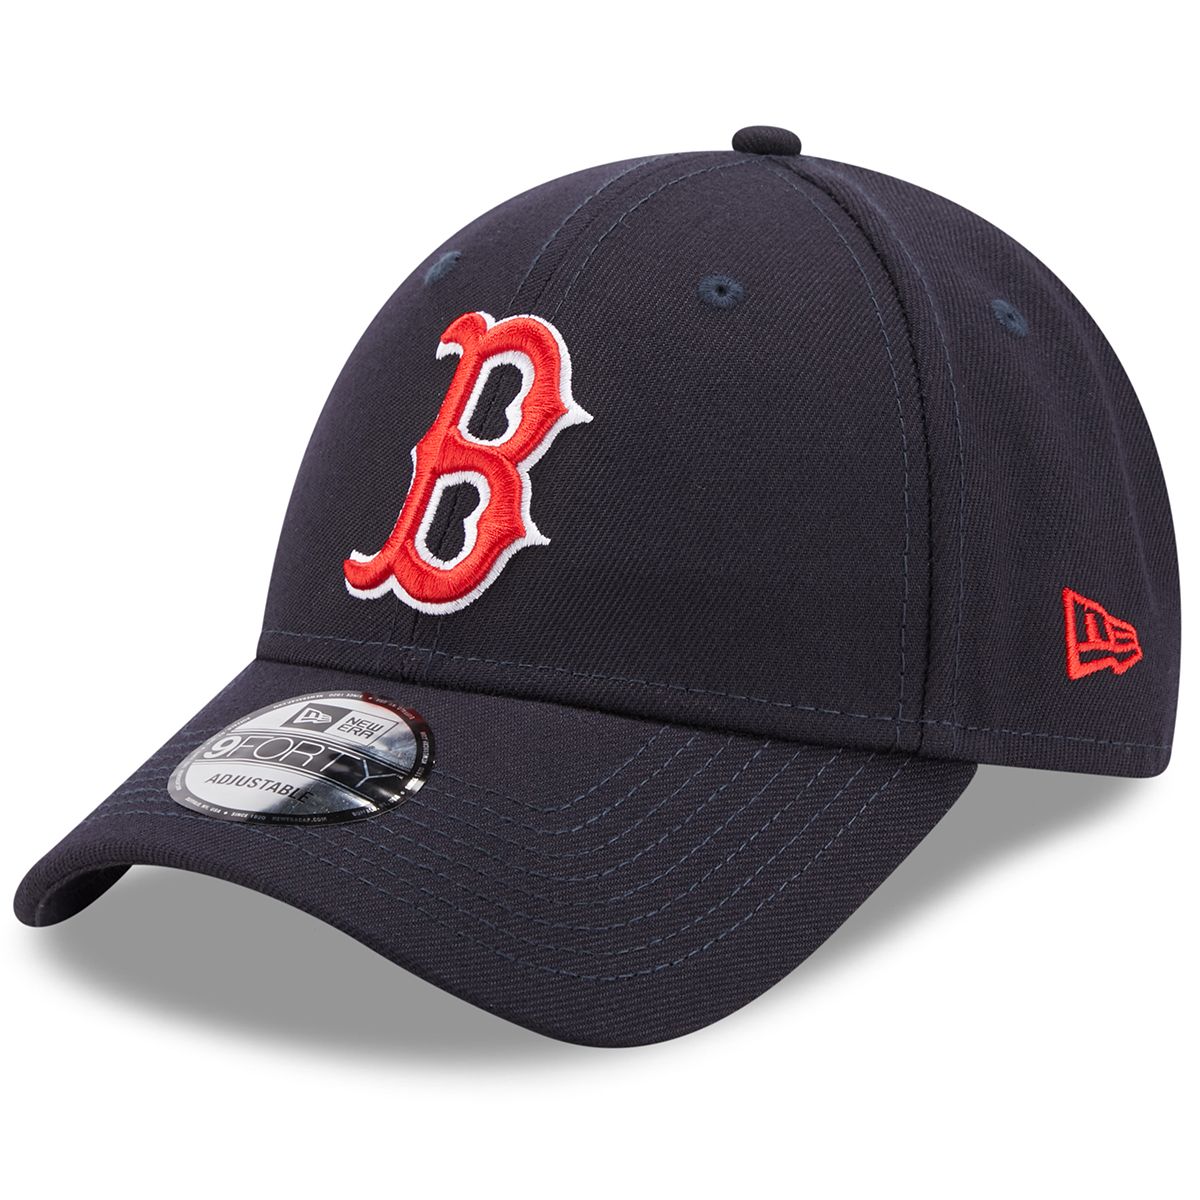 Boston Red Sox Apparel & Gear: Jerseys, Hats & More